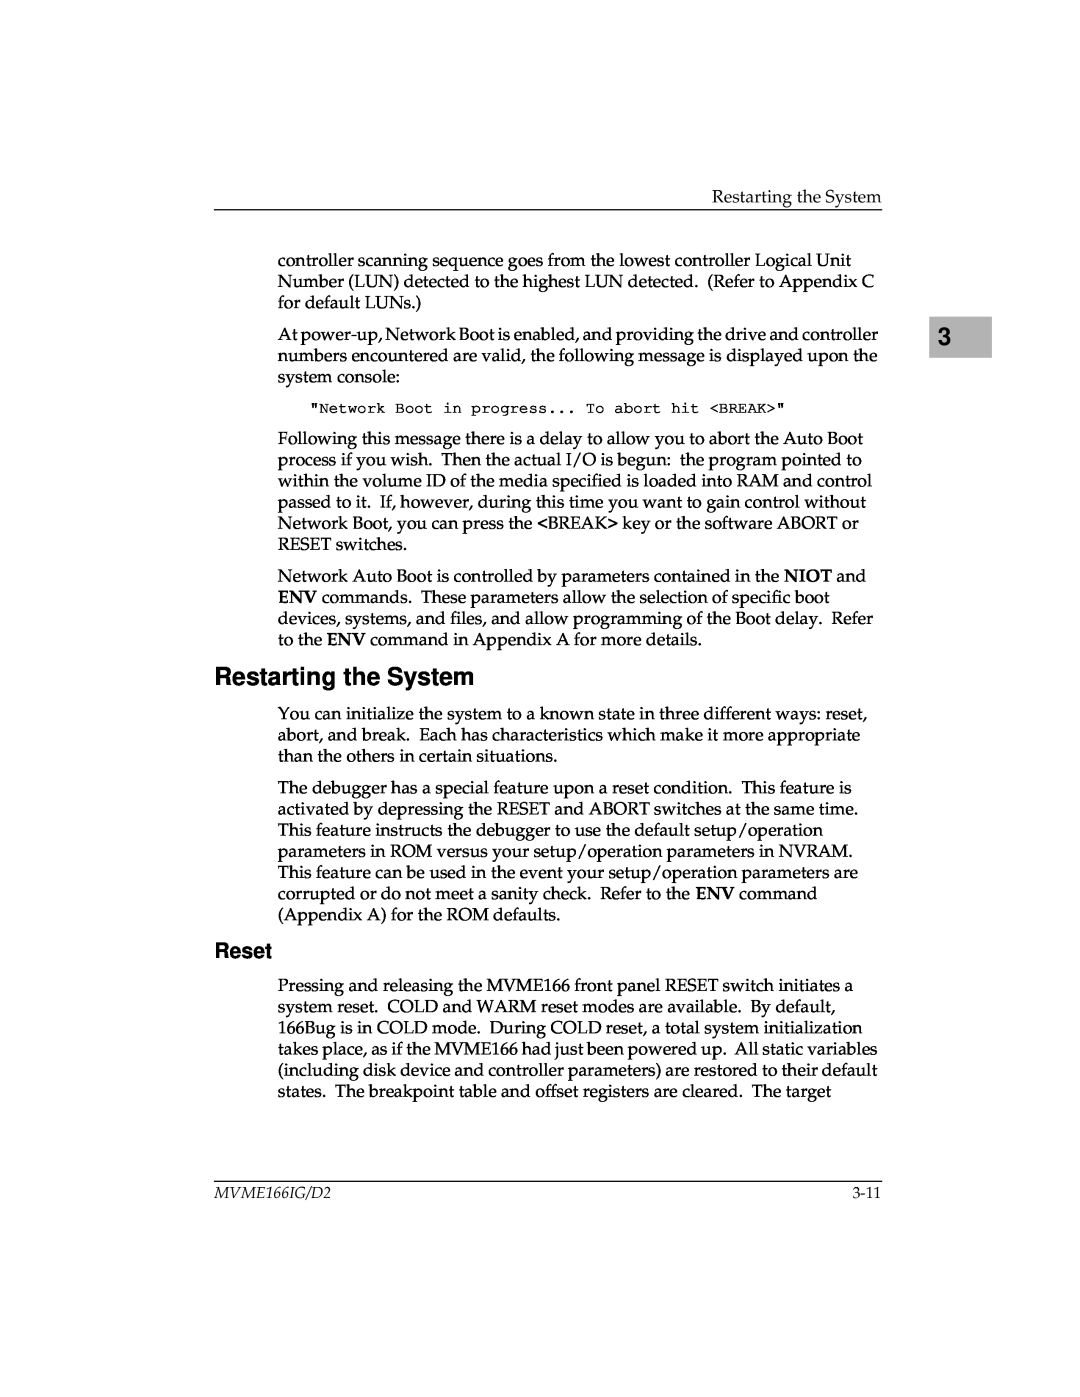 Motorola MVME166IG/D2, MVME166D2 manual Restarting the System, Reset 